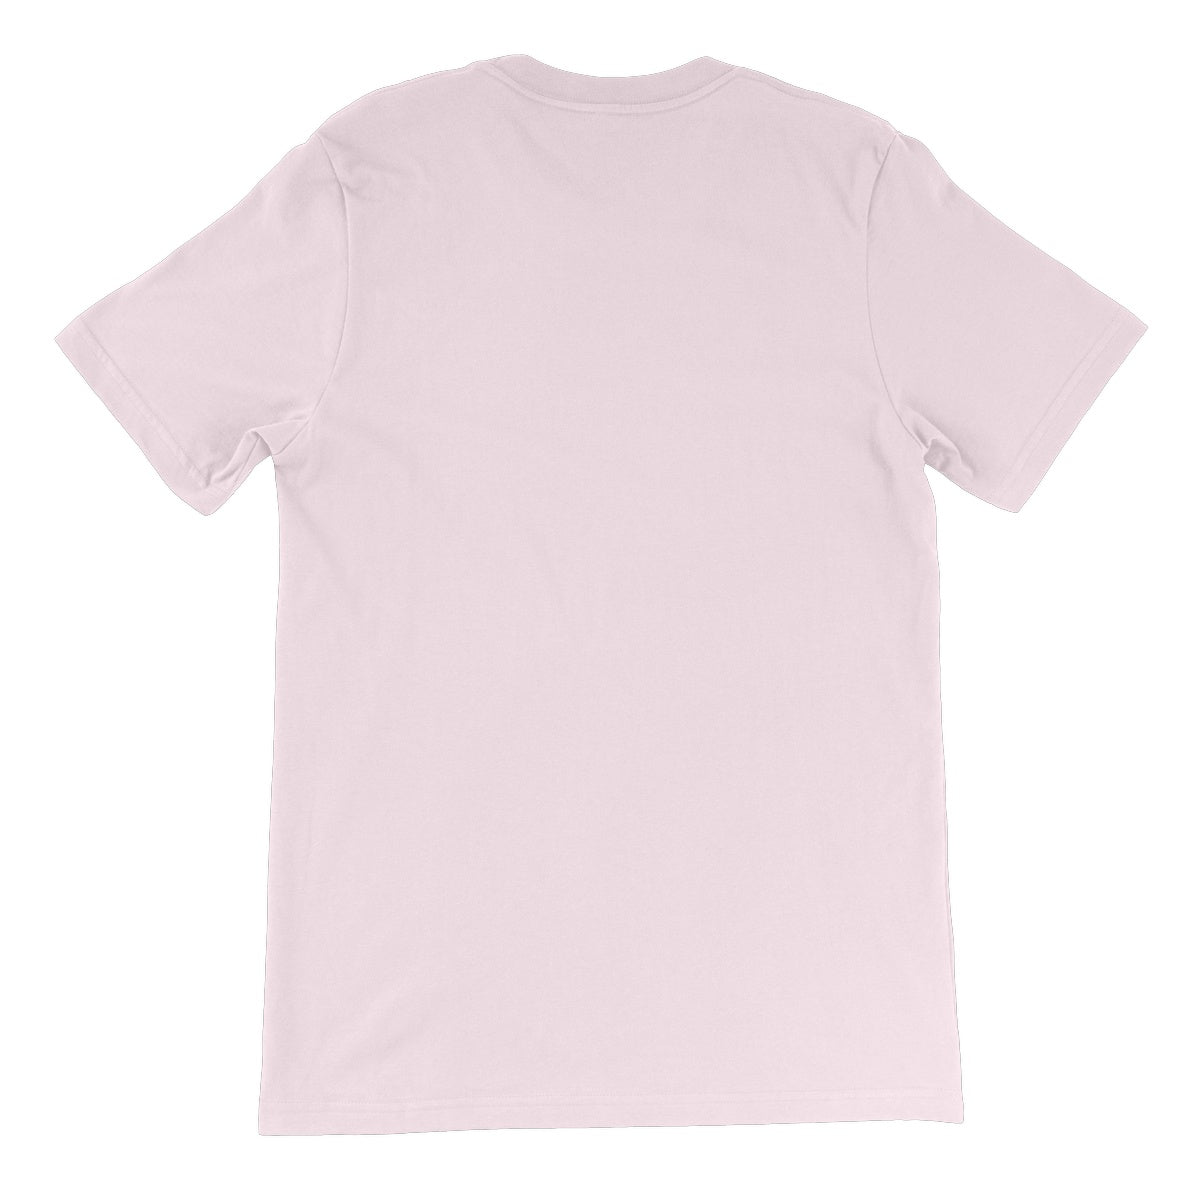 Green Mile Illustrated Unisex Short Sleeve T-Shirt